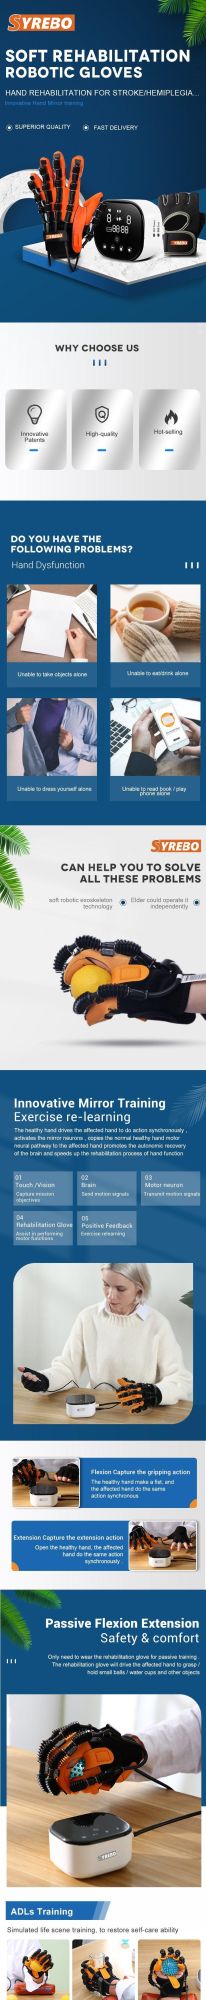 Best Physical Therapy Equipments Hemiplegia Finger Rehabilitation Trainer Robot Glove for Stroke Hand Function Training Exercise